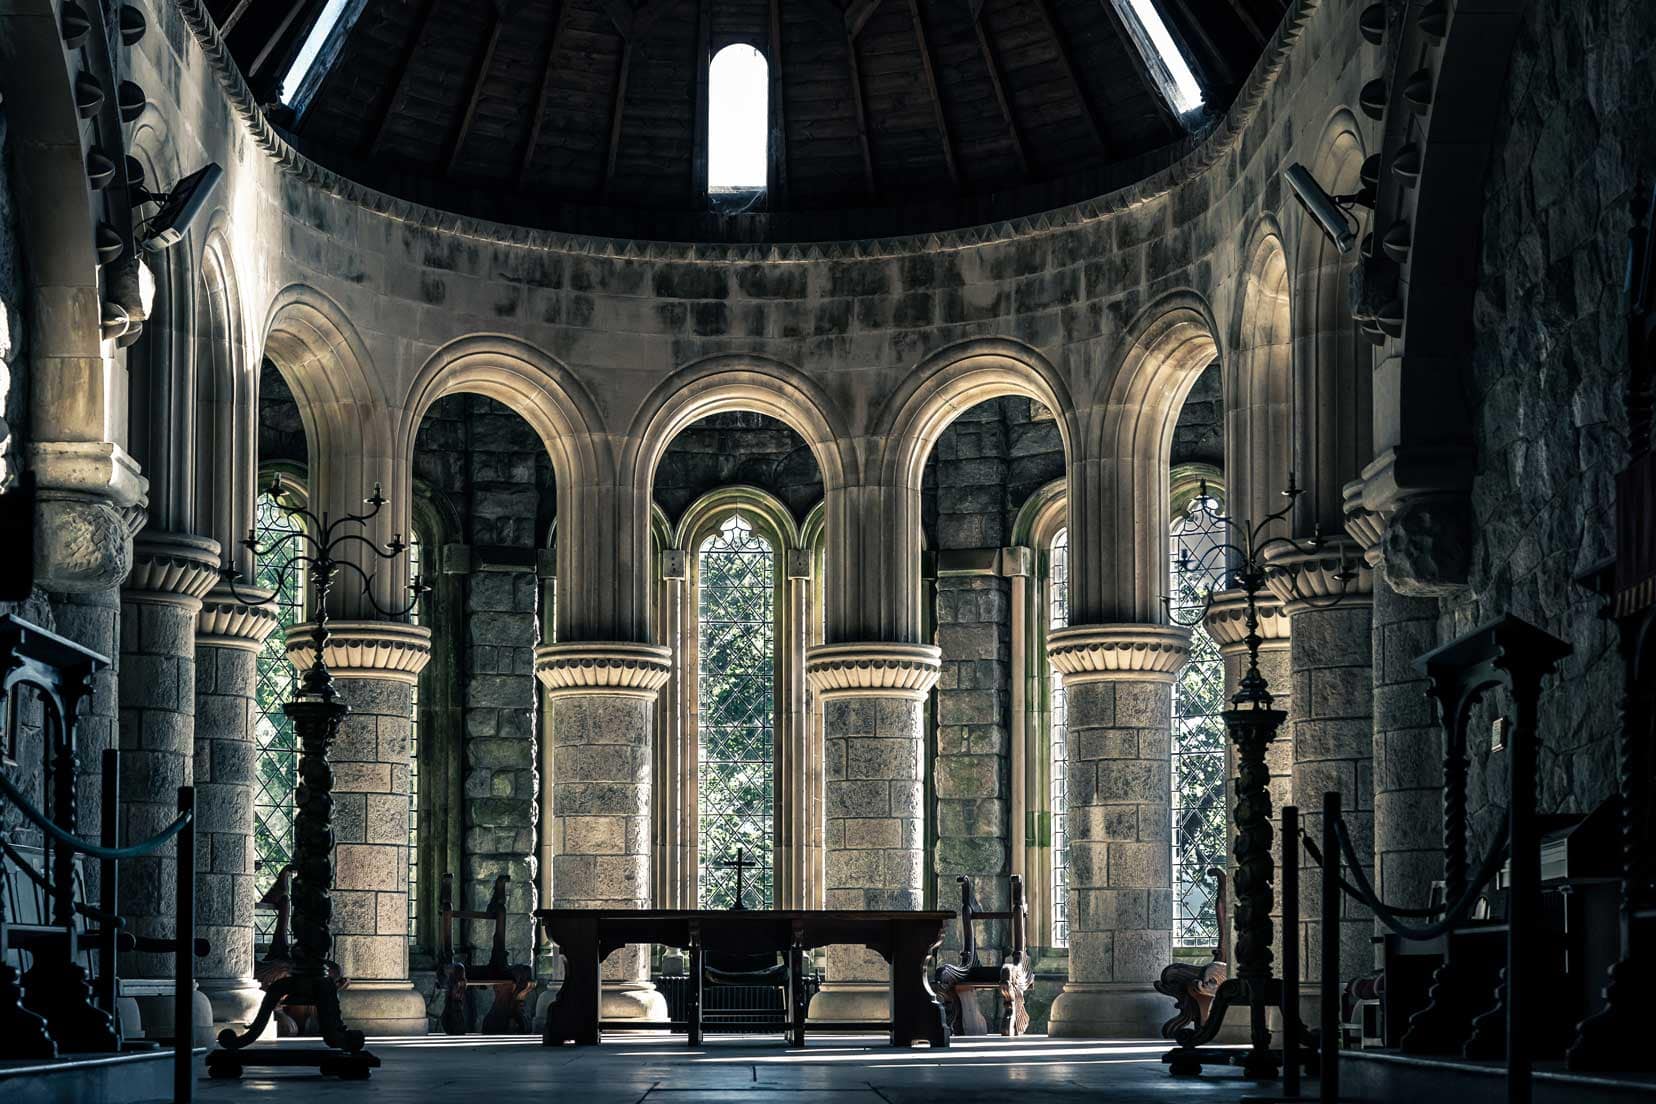 Symmetry of St conan's church interior